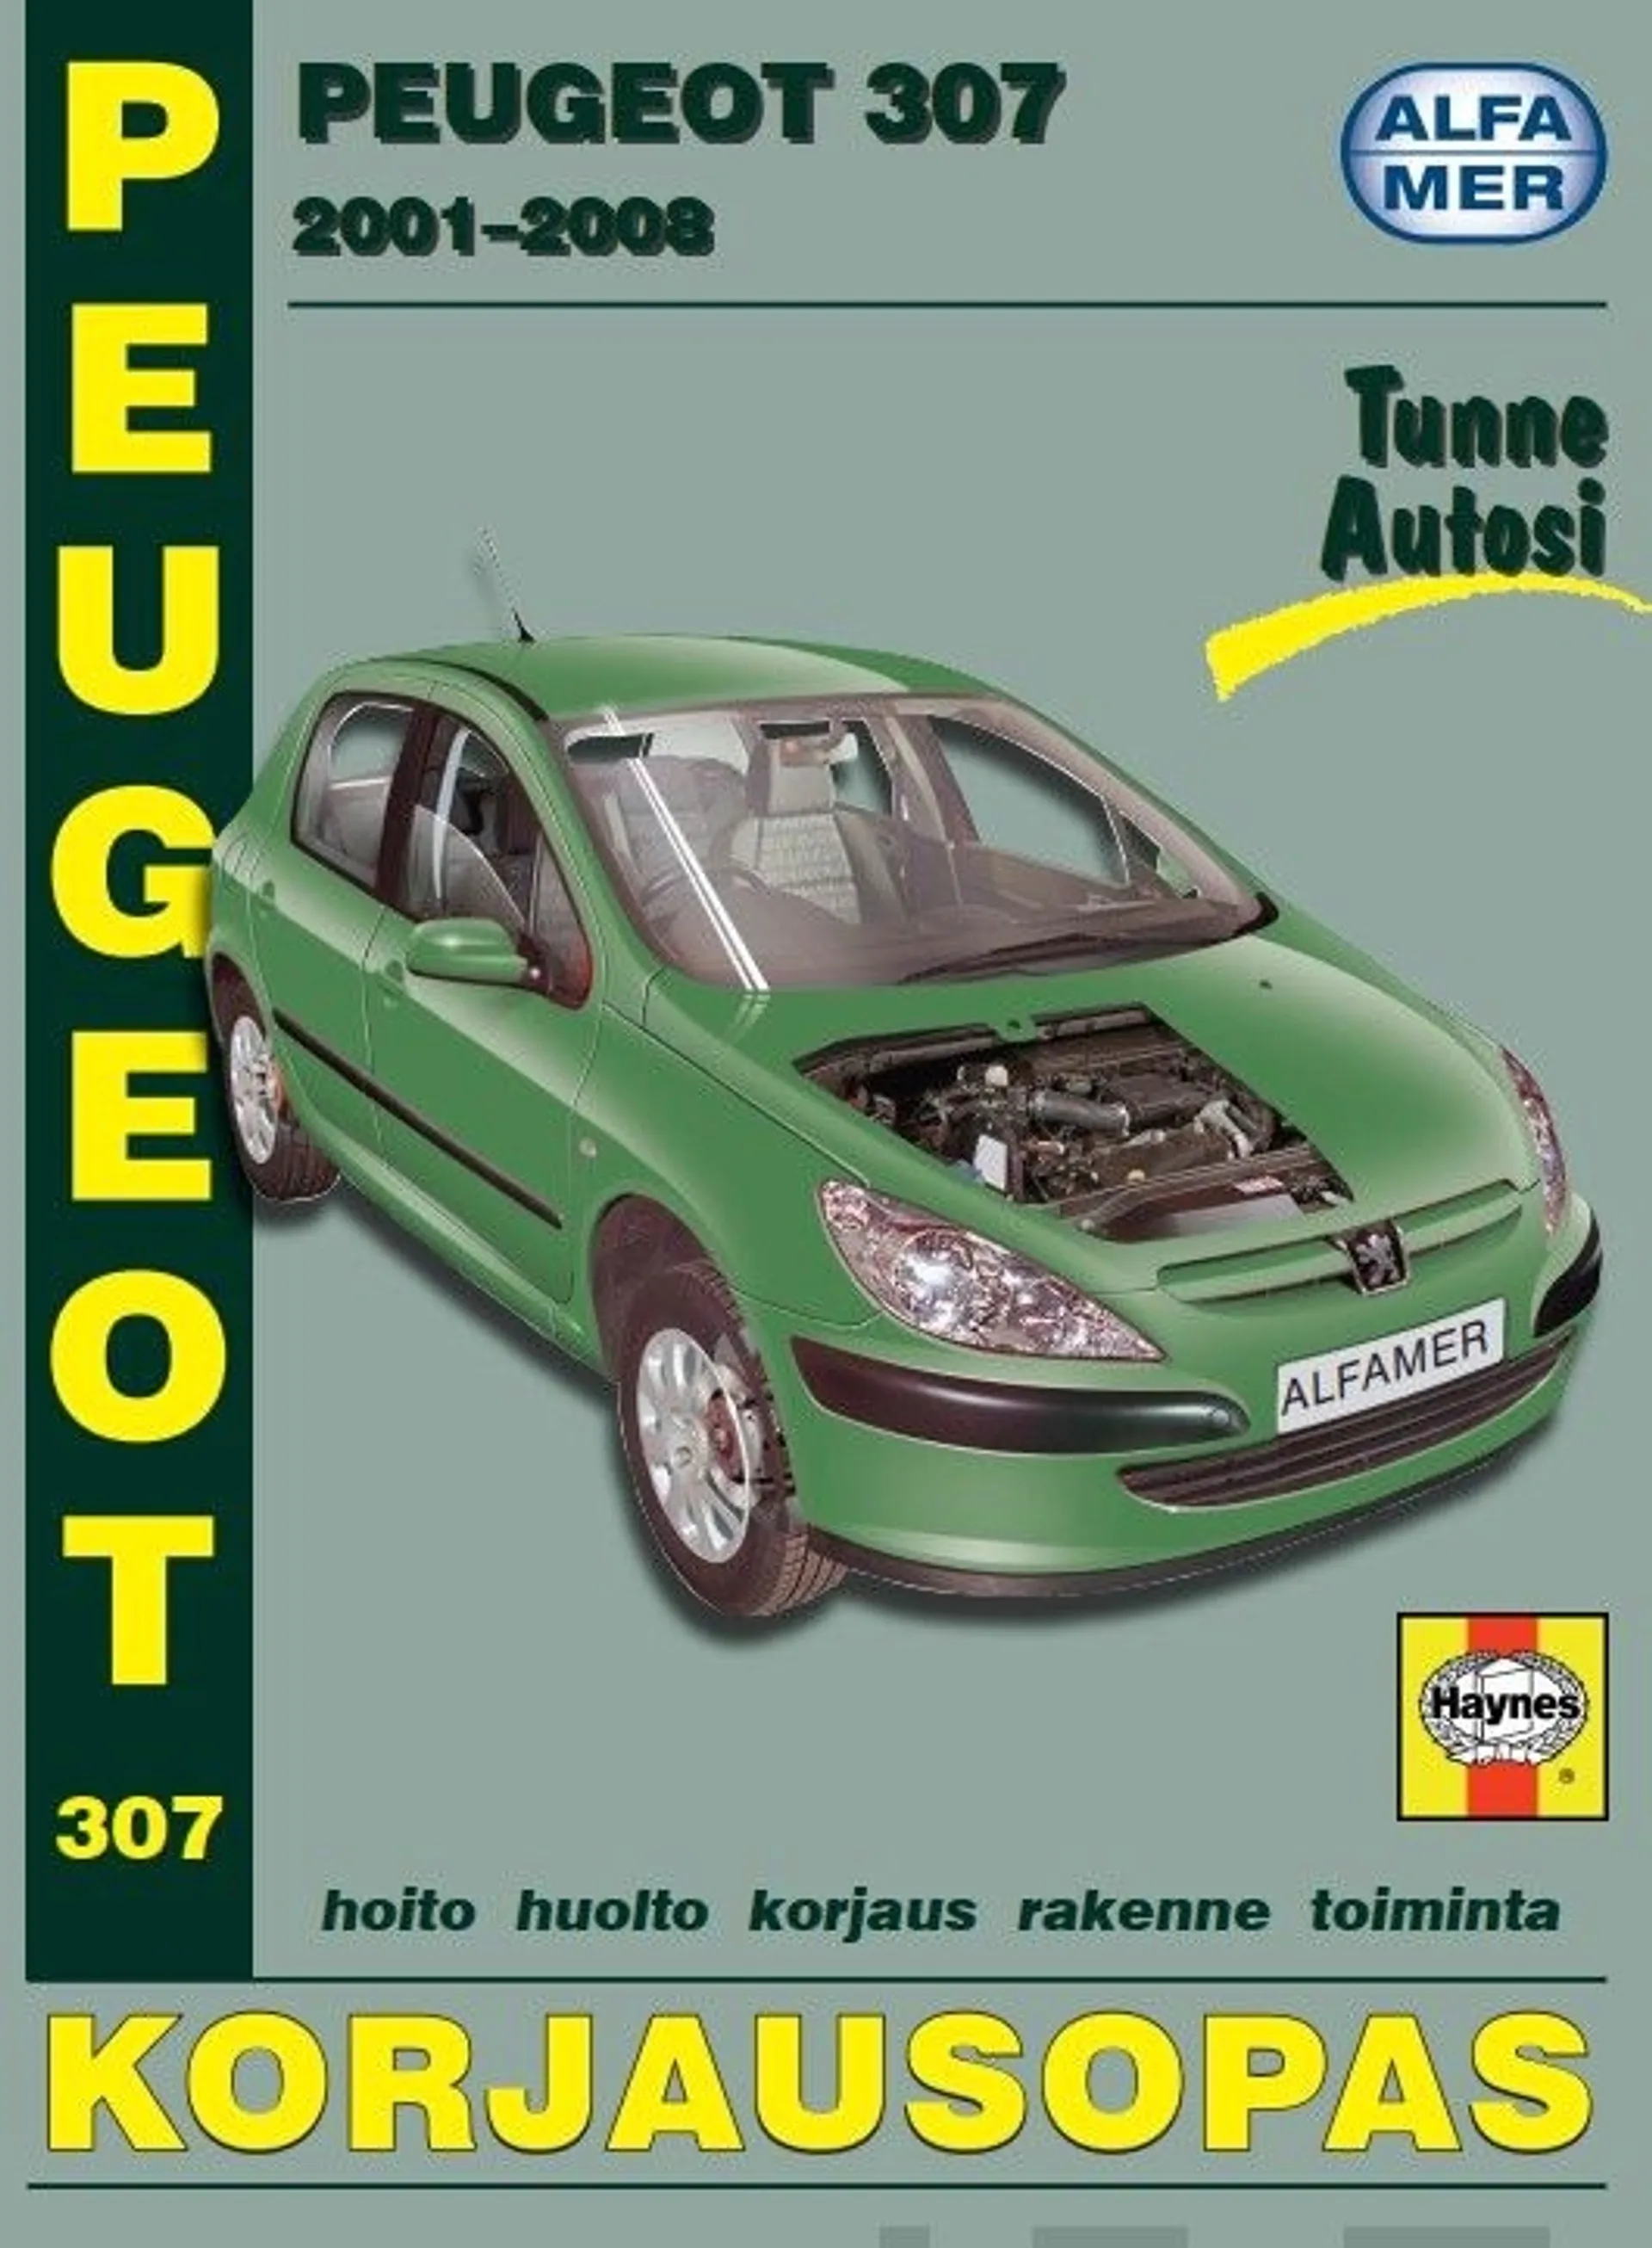 Mauno, Peugeot 307 2001-2008 - korjausopas